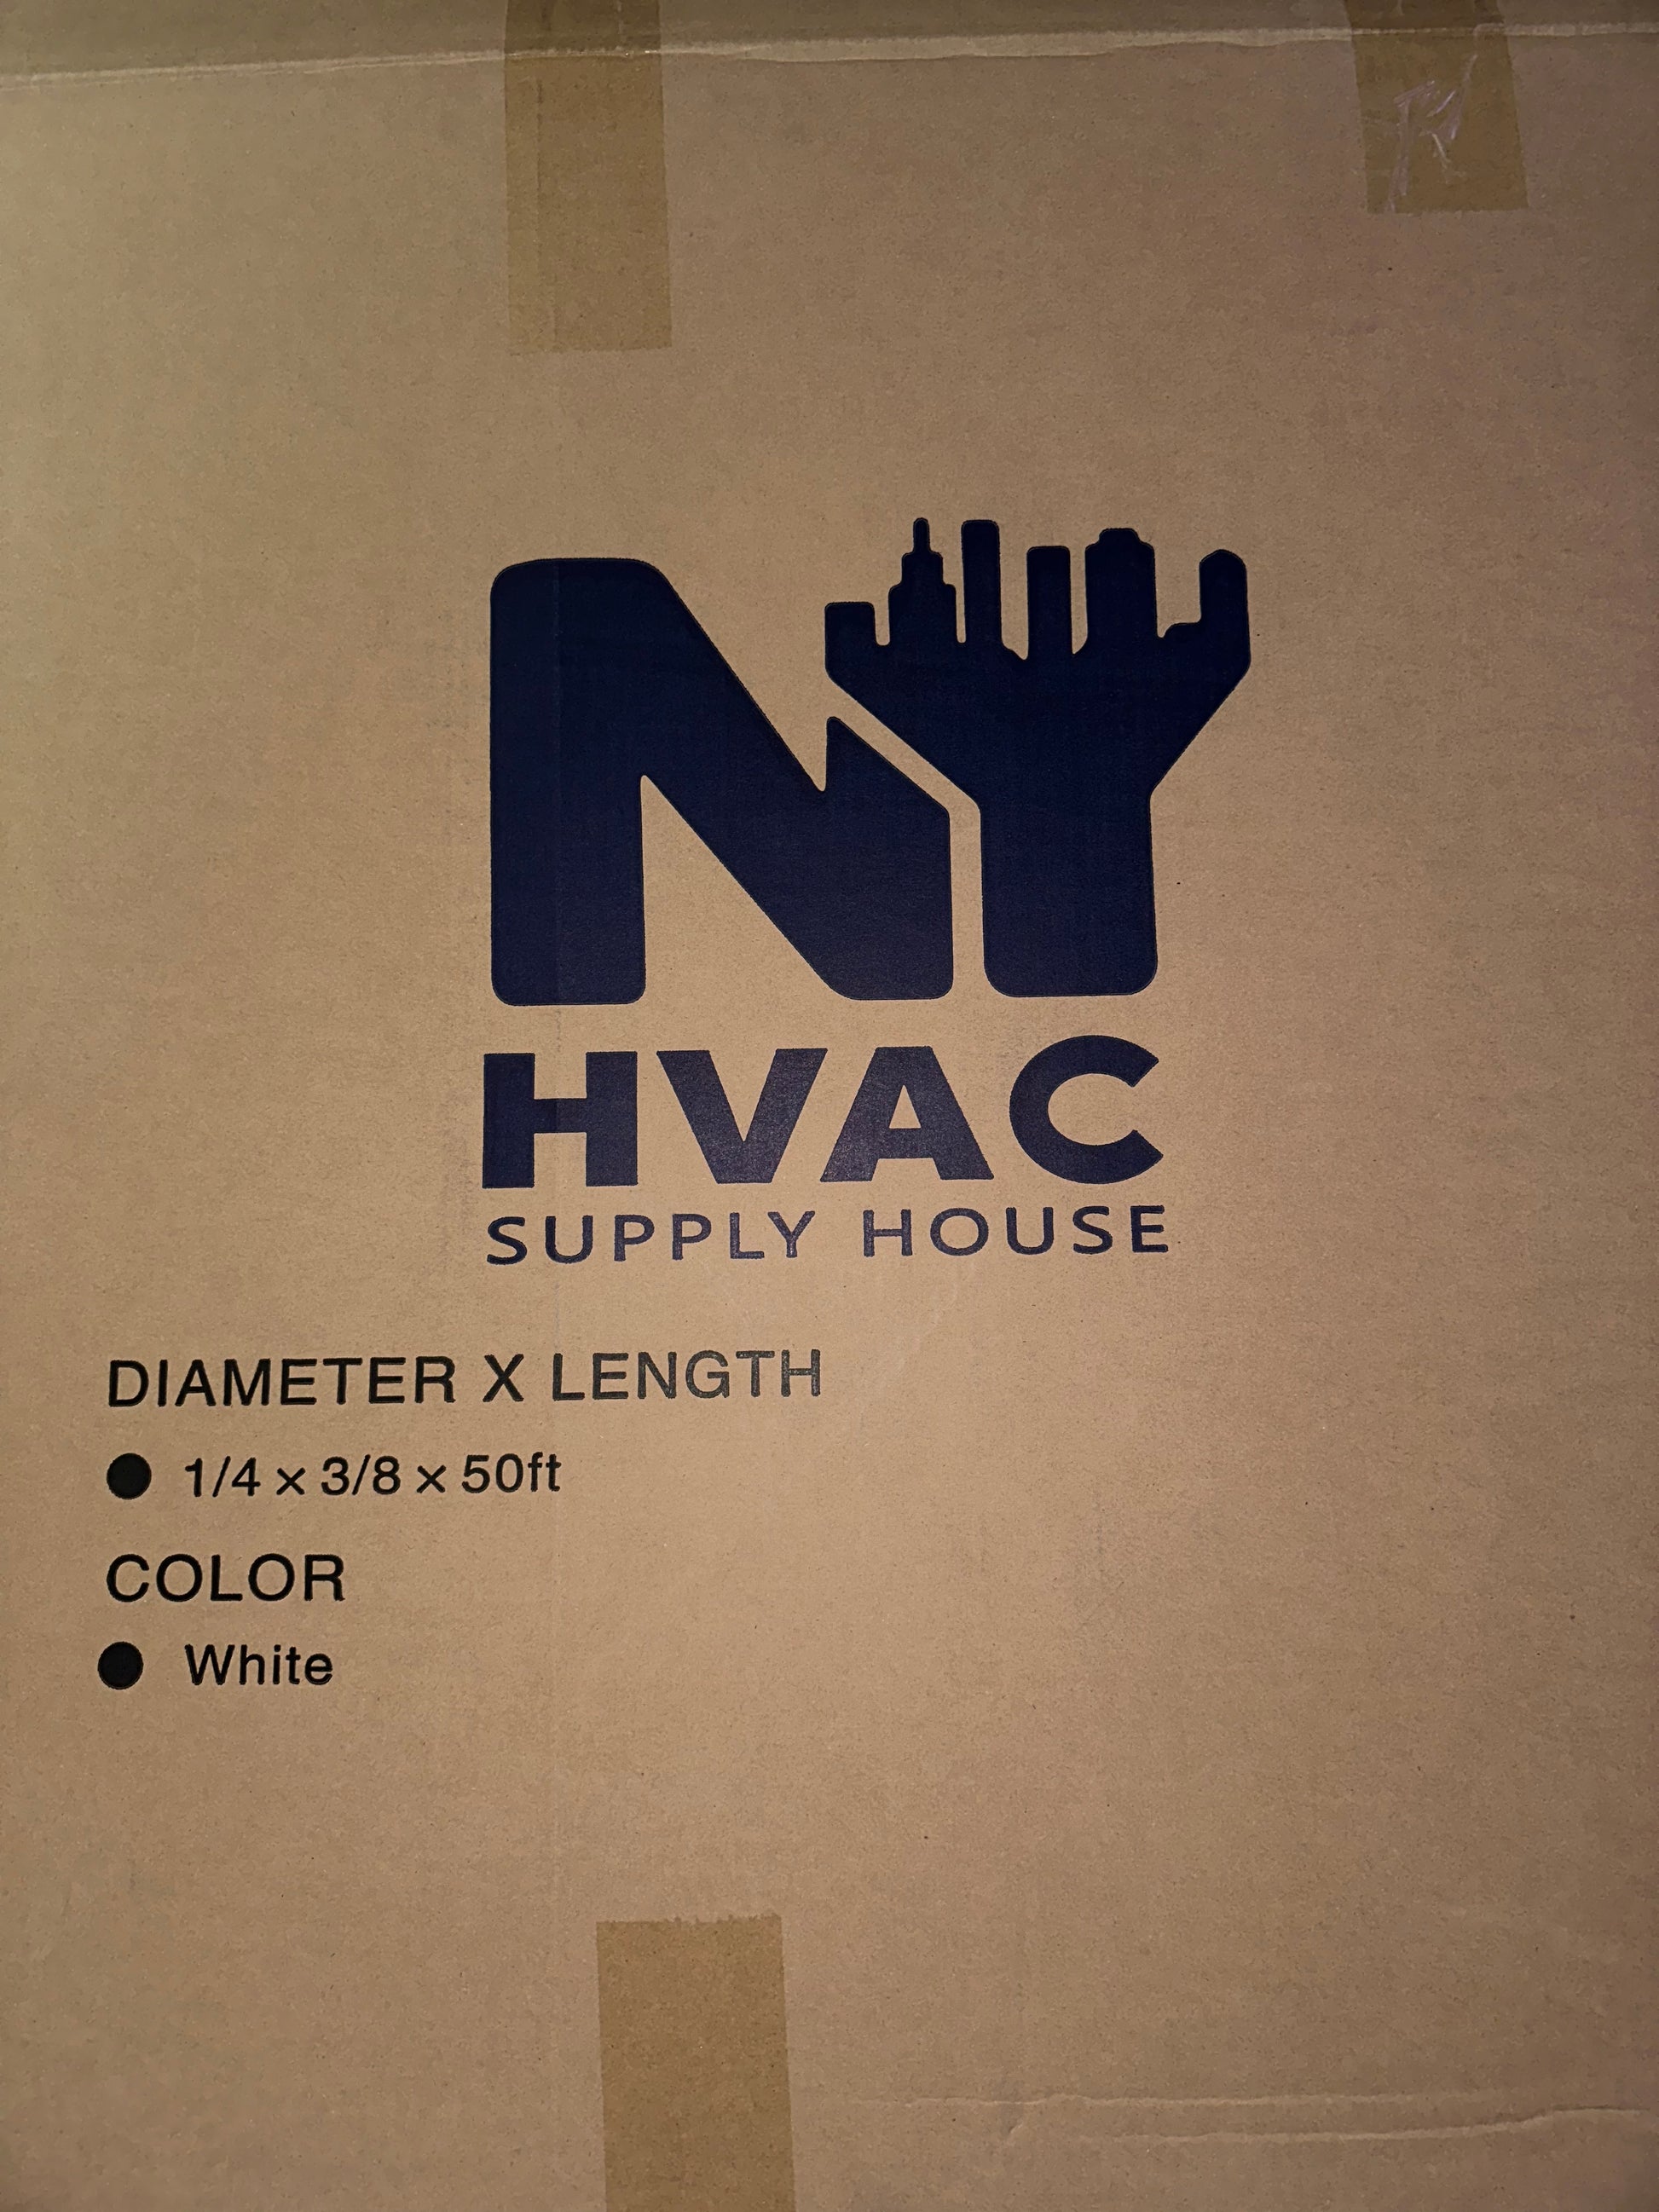 HVAC Supply House Bronx Ny